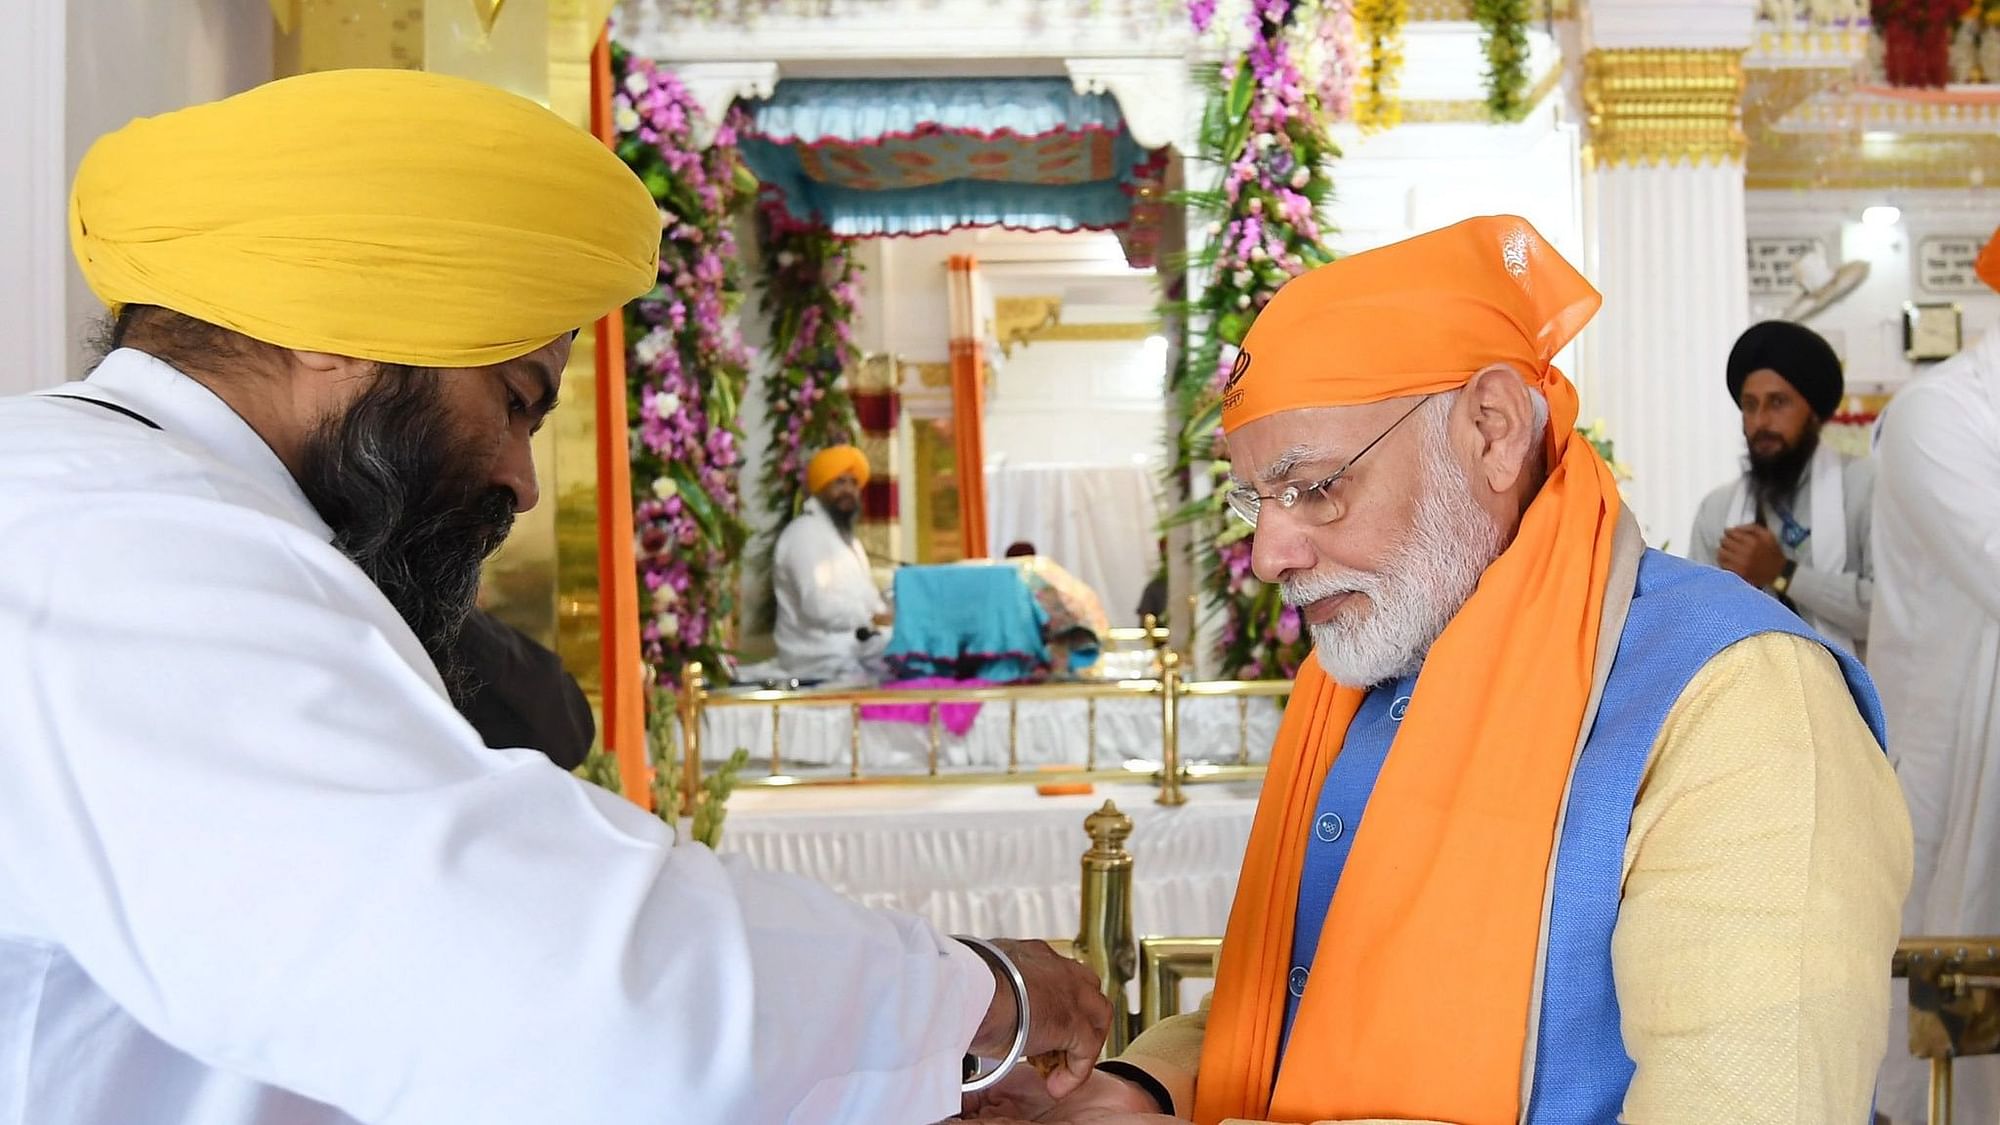 Prime Minister Narendra Modi lauded Sikhism founder Guru Nanak Dev for spreading the message of unity.